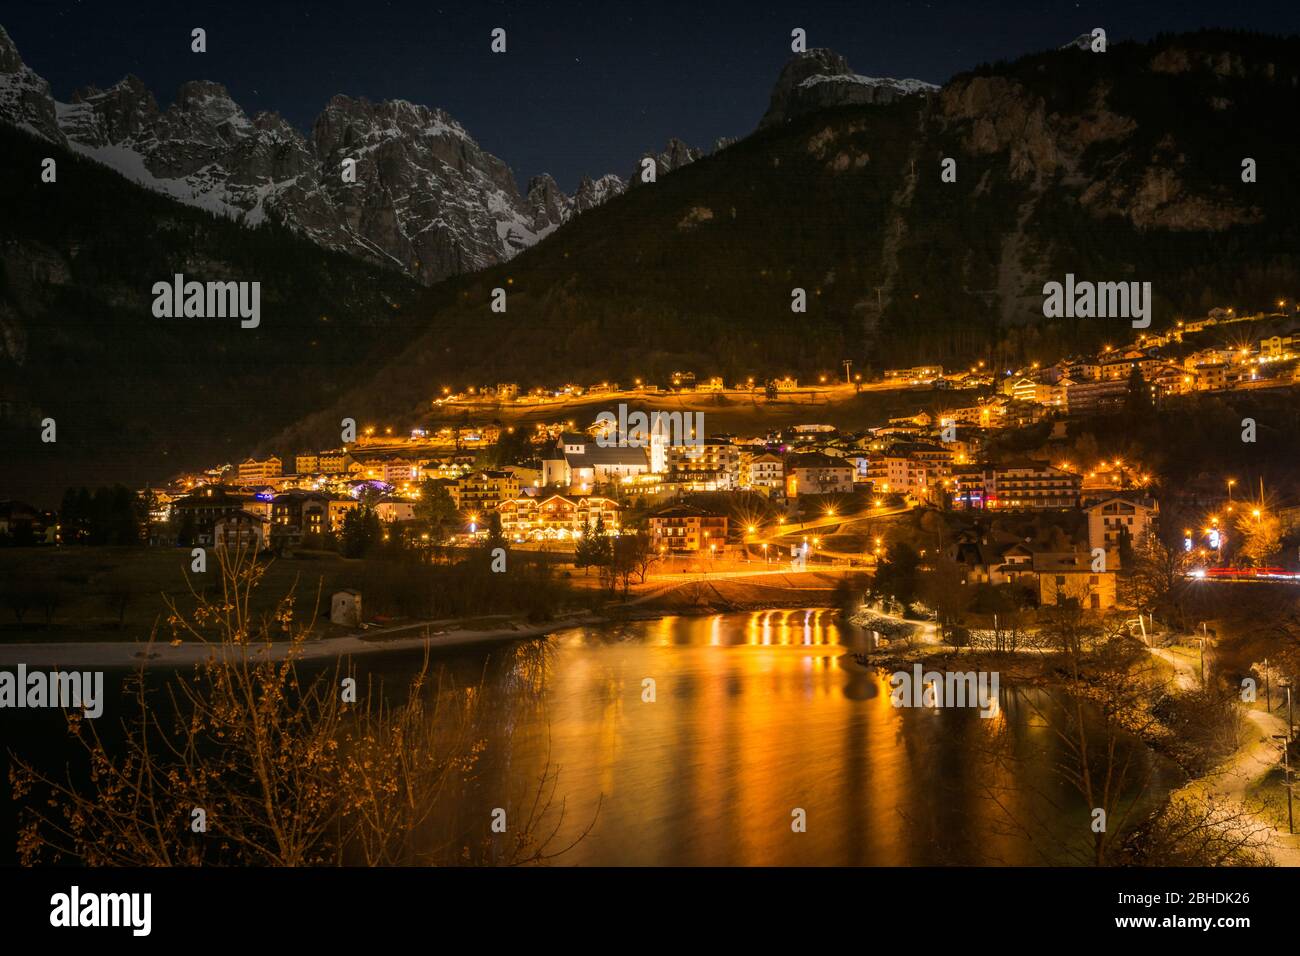 Molveno Lake and the Molveno village in Trentino Alto Adige - Trento, norther Italy. Night landscape of the Molveno lake during the Christmas holiday Stock Photo